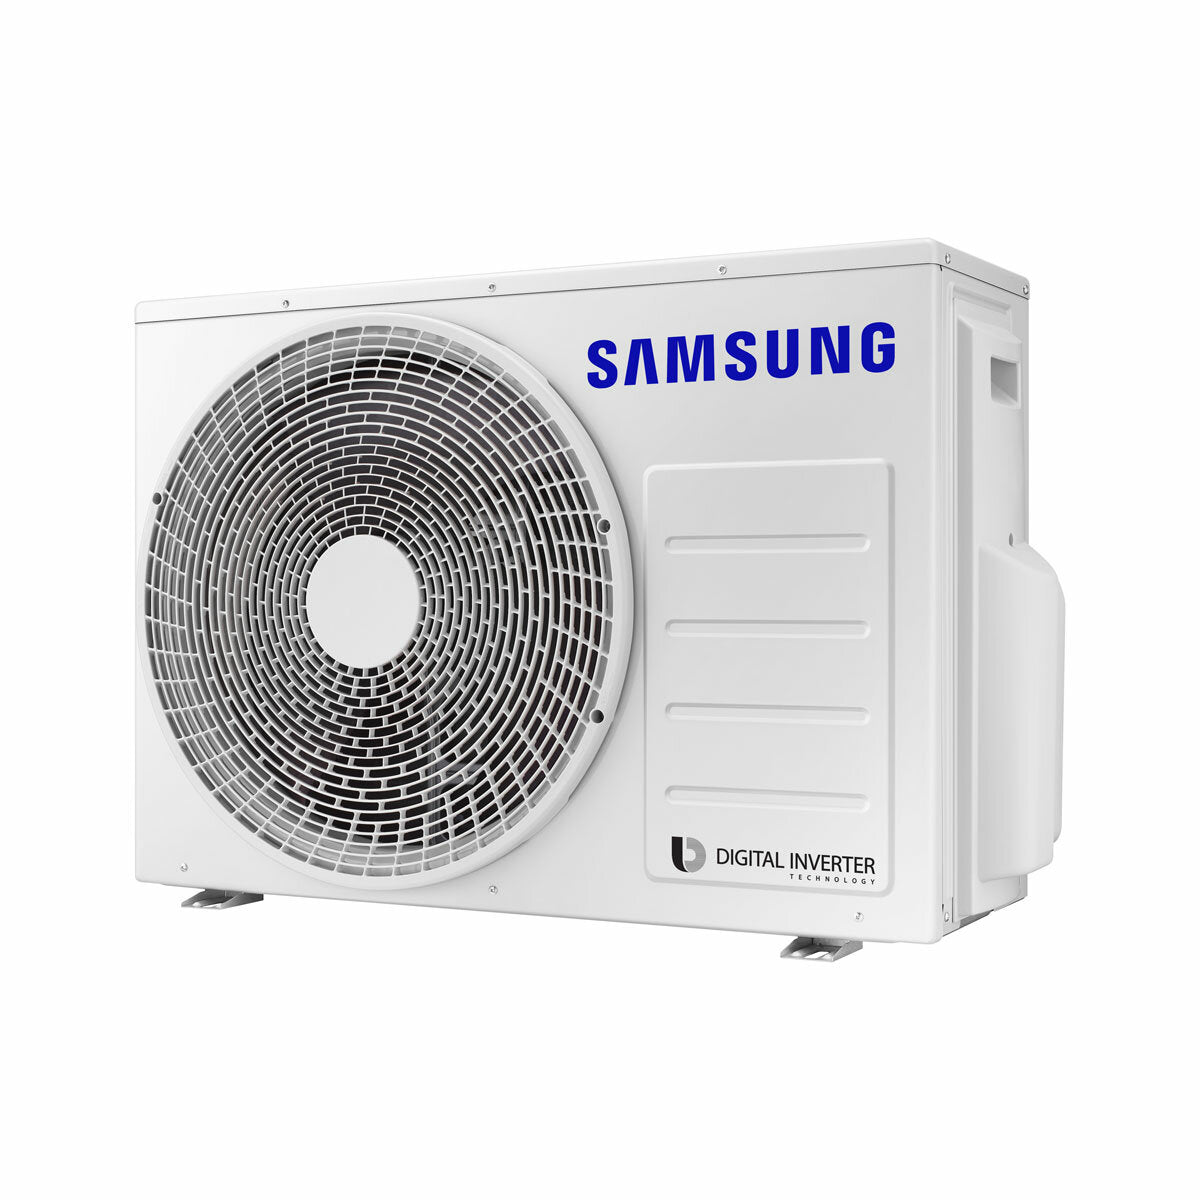 Samsung windfree Avant air conditioner trial split 9000 + 9000 + 9000 BTU inverter A ++ wifi outdoor unit 5.2 kW